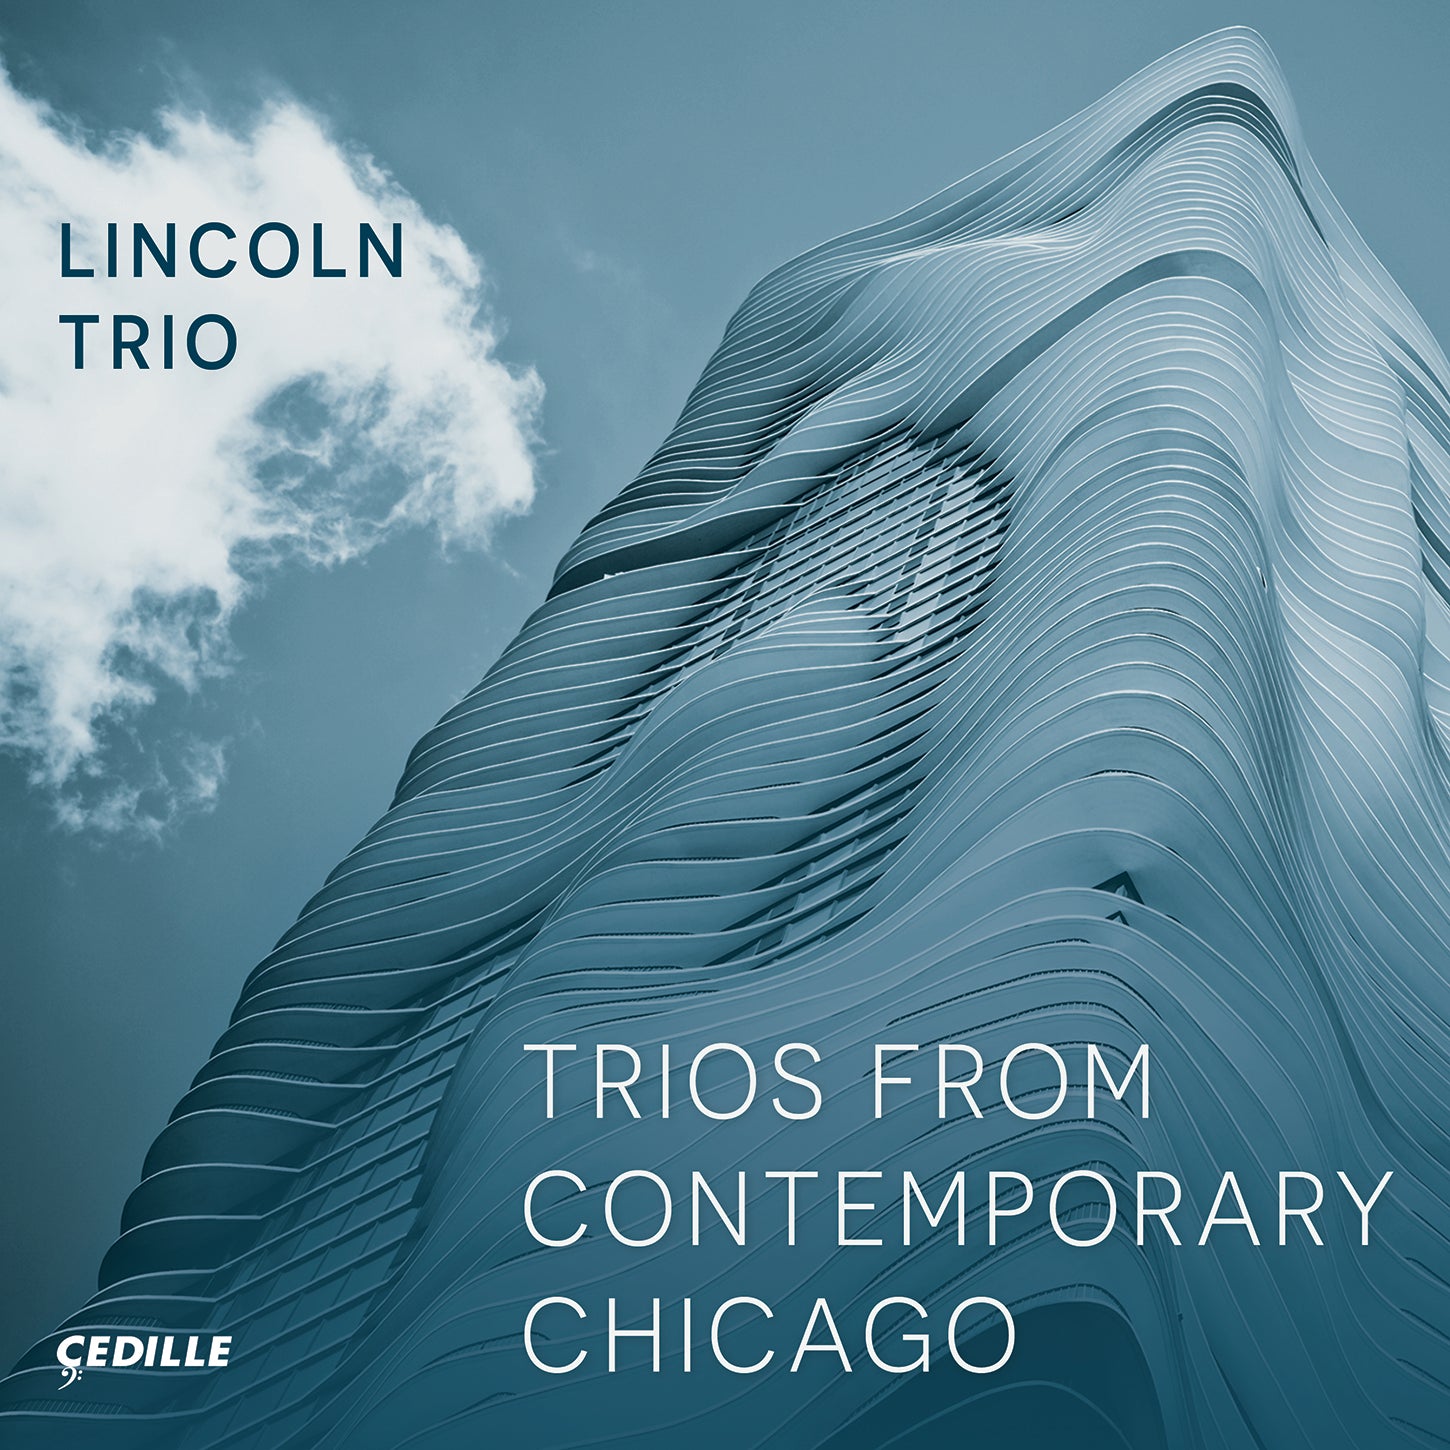 Garrop, Okpebholo, Ran, Thomas, Zupko: Trios from Contemporary Chicago